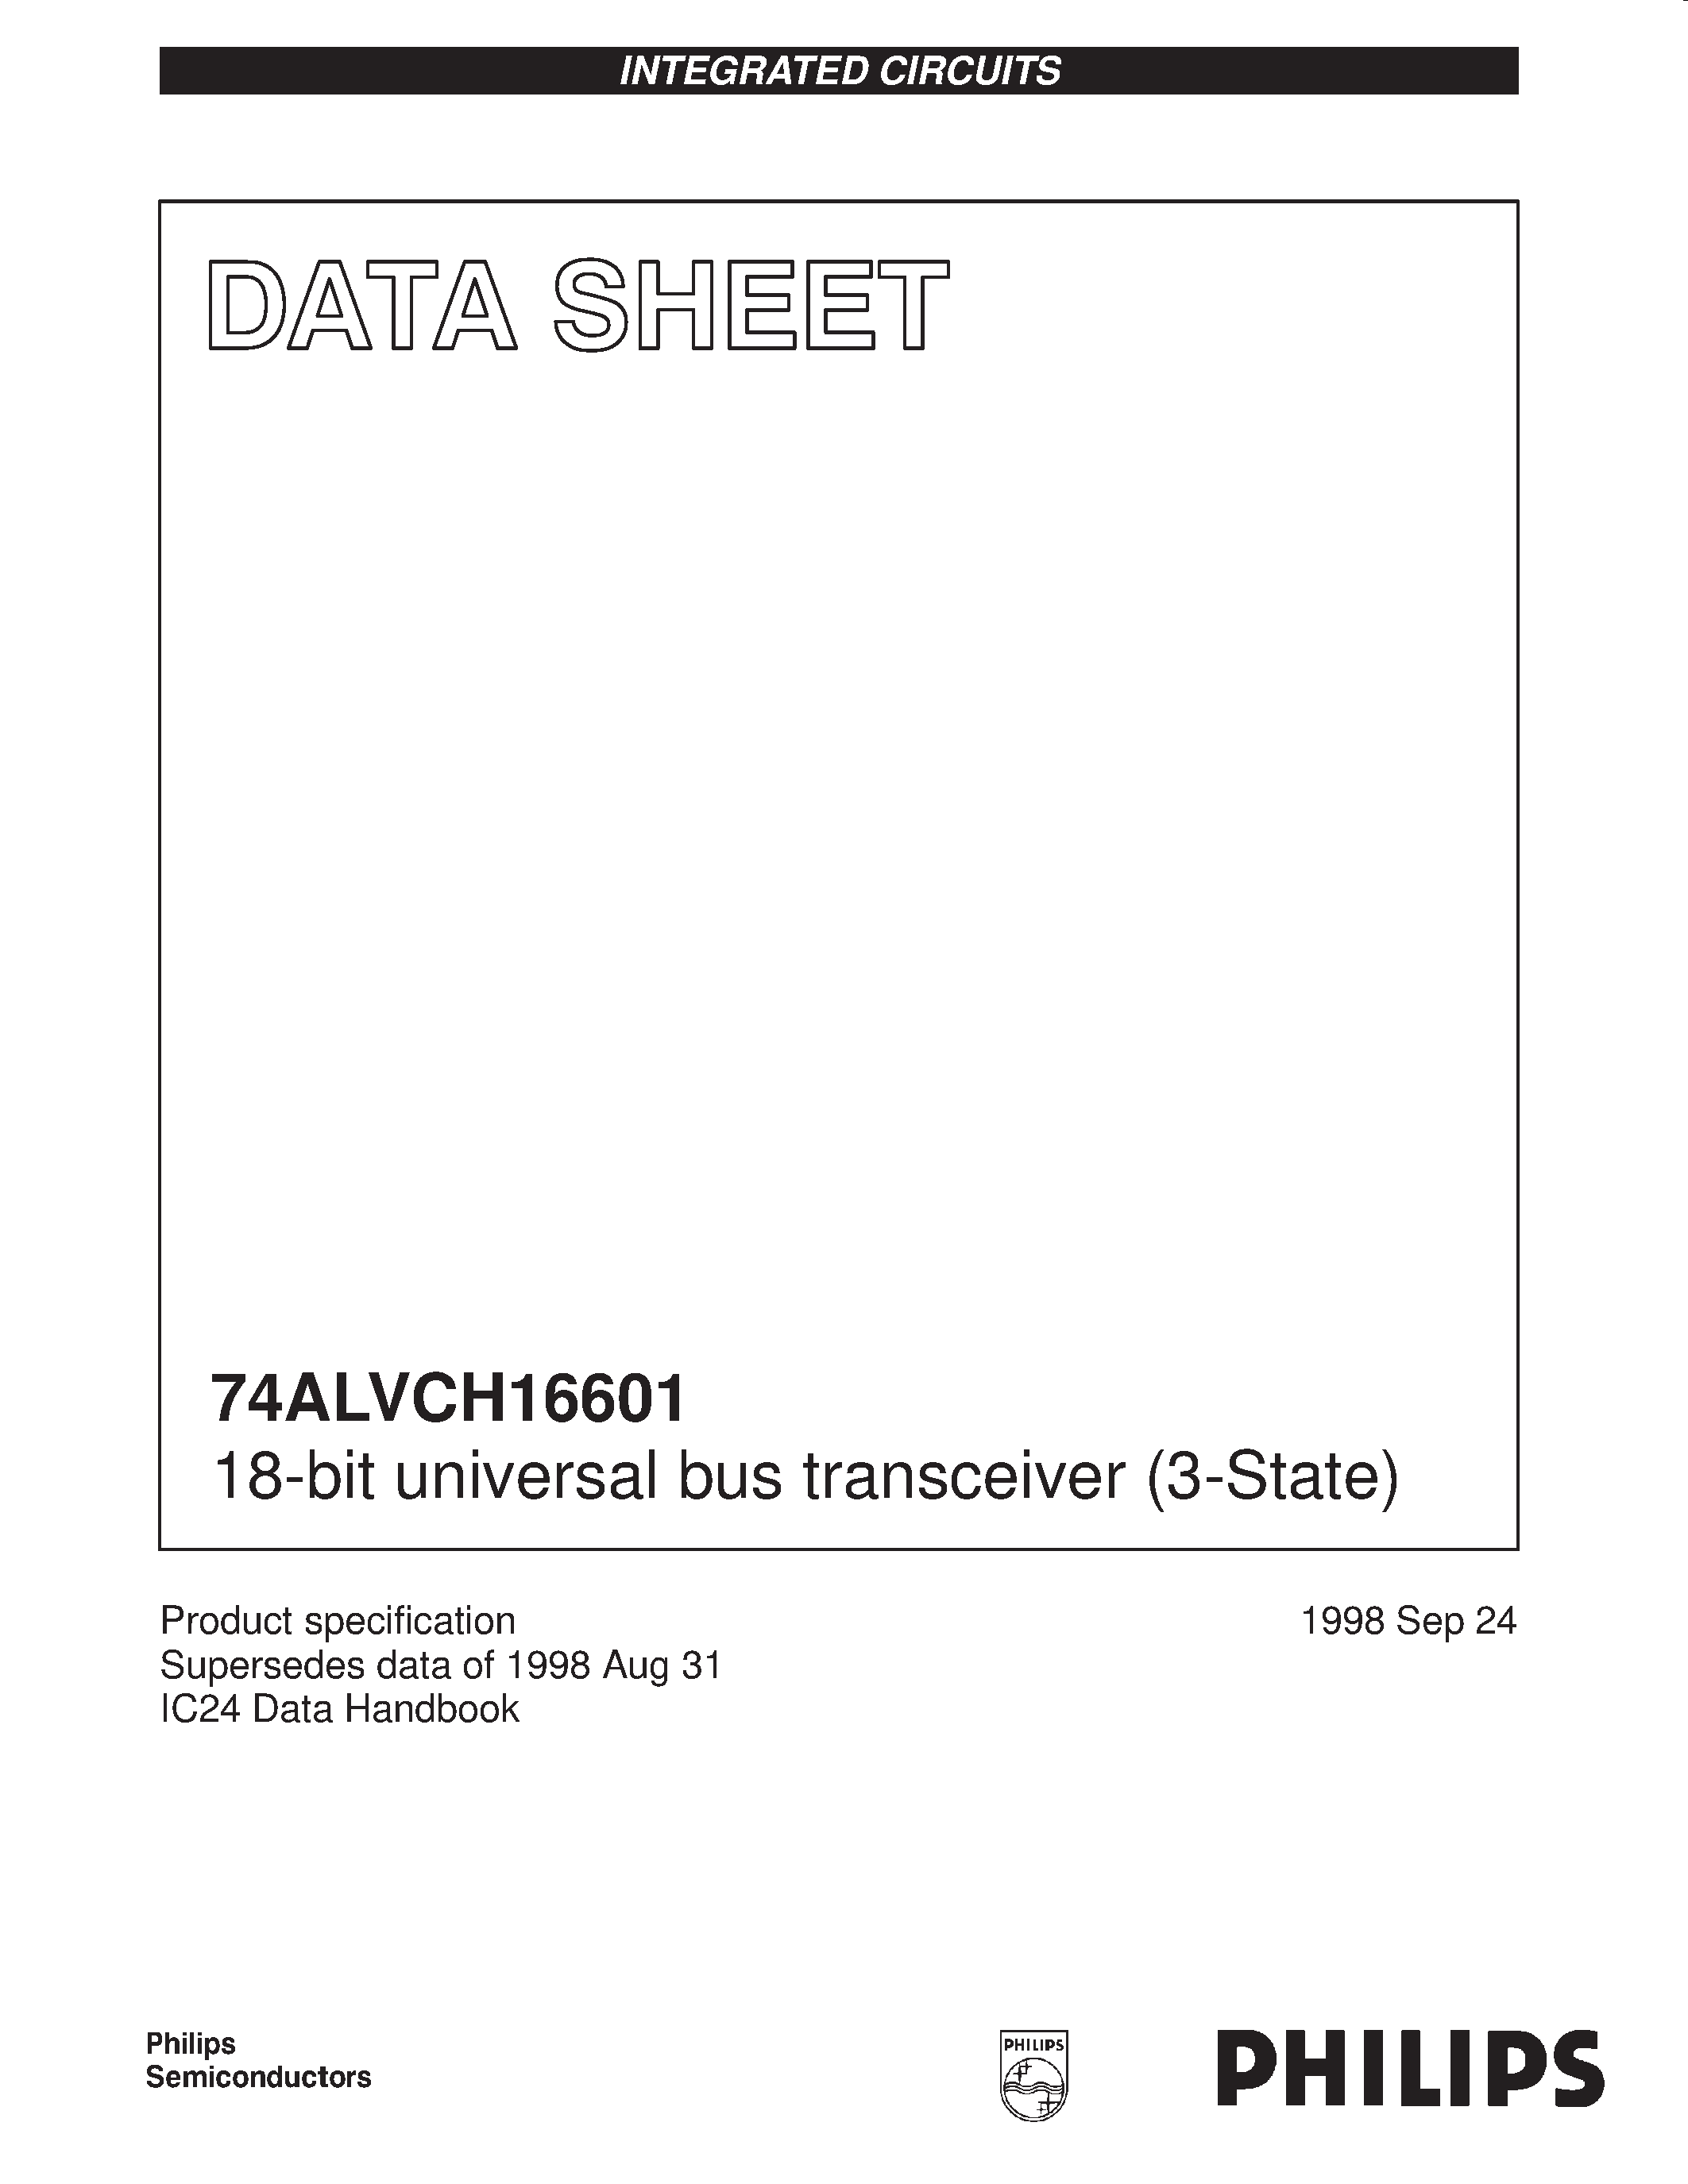 Даташит 74ALVCH16601DGG - 18-bit universal bus transceiver 3-State страница 1